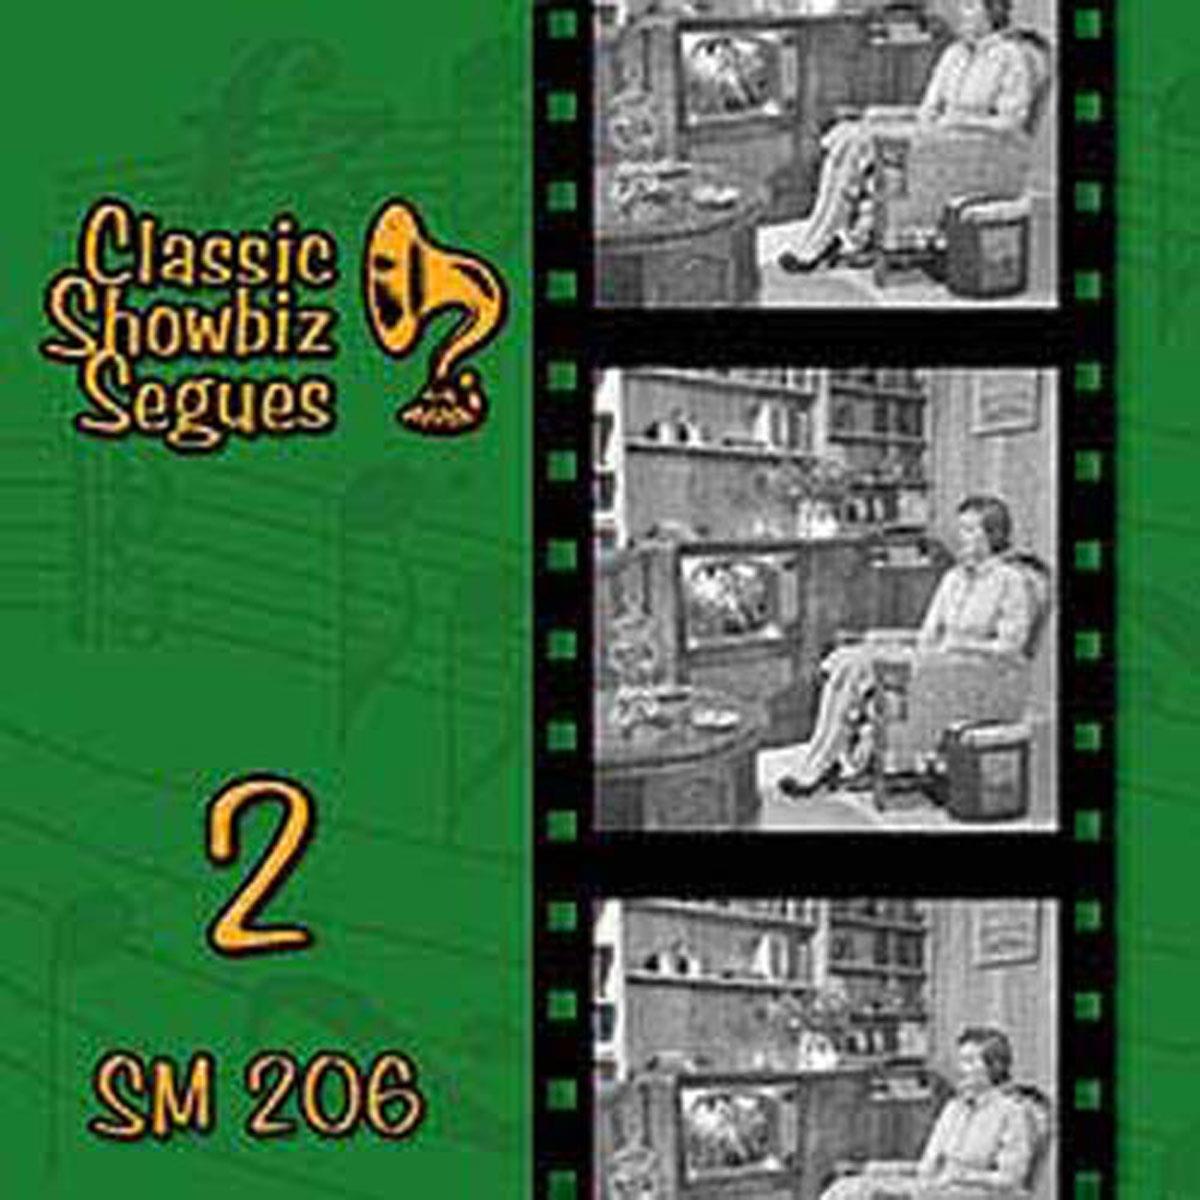 

Sound Ideas Classic Showbiz Segues 2 Royalty-Free Audio CD